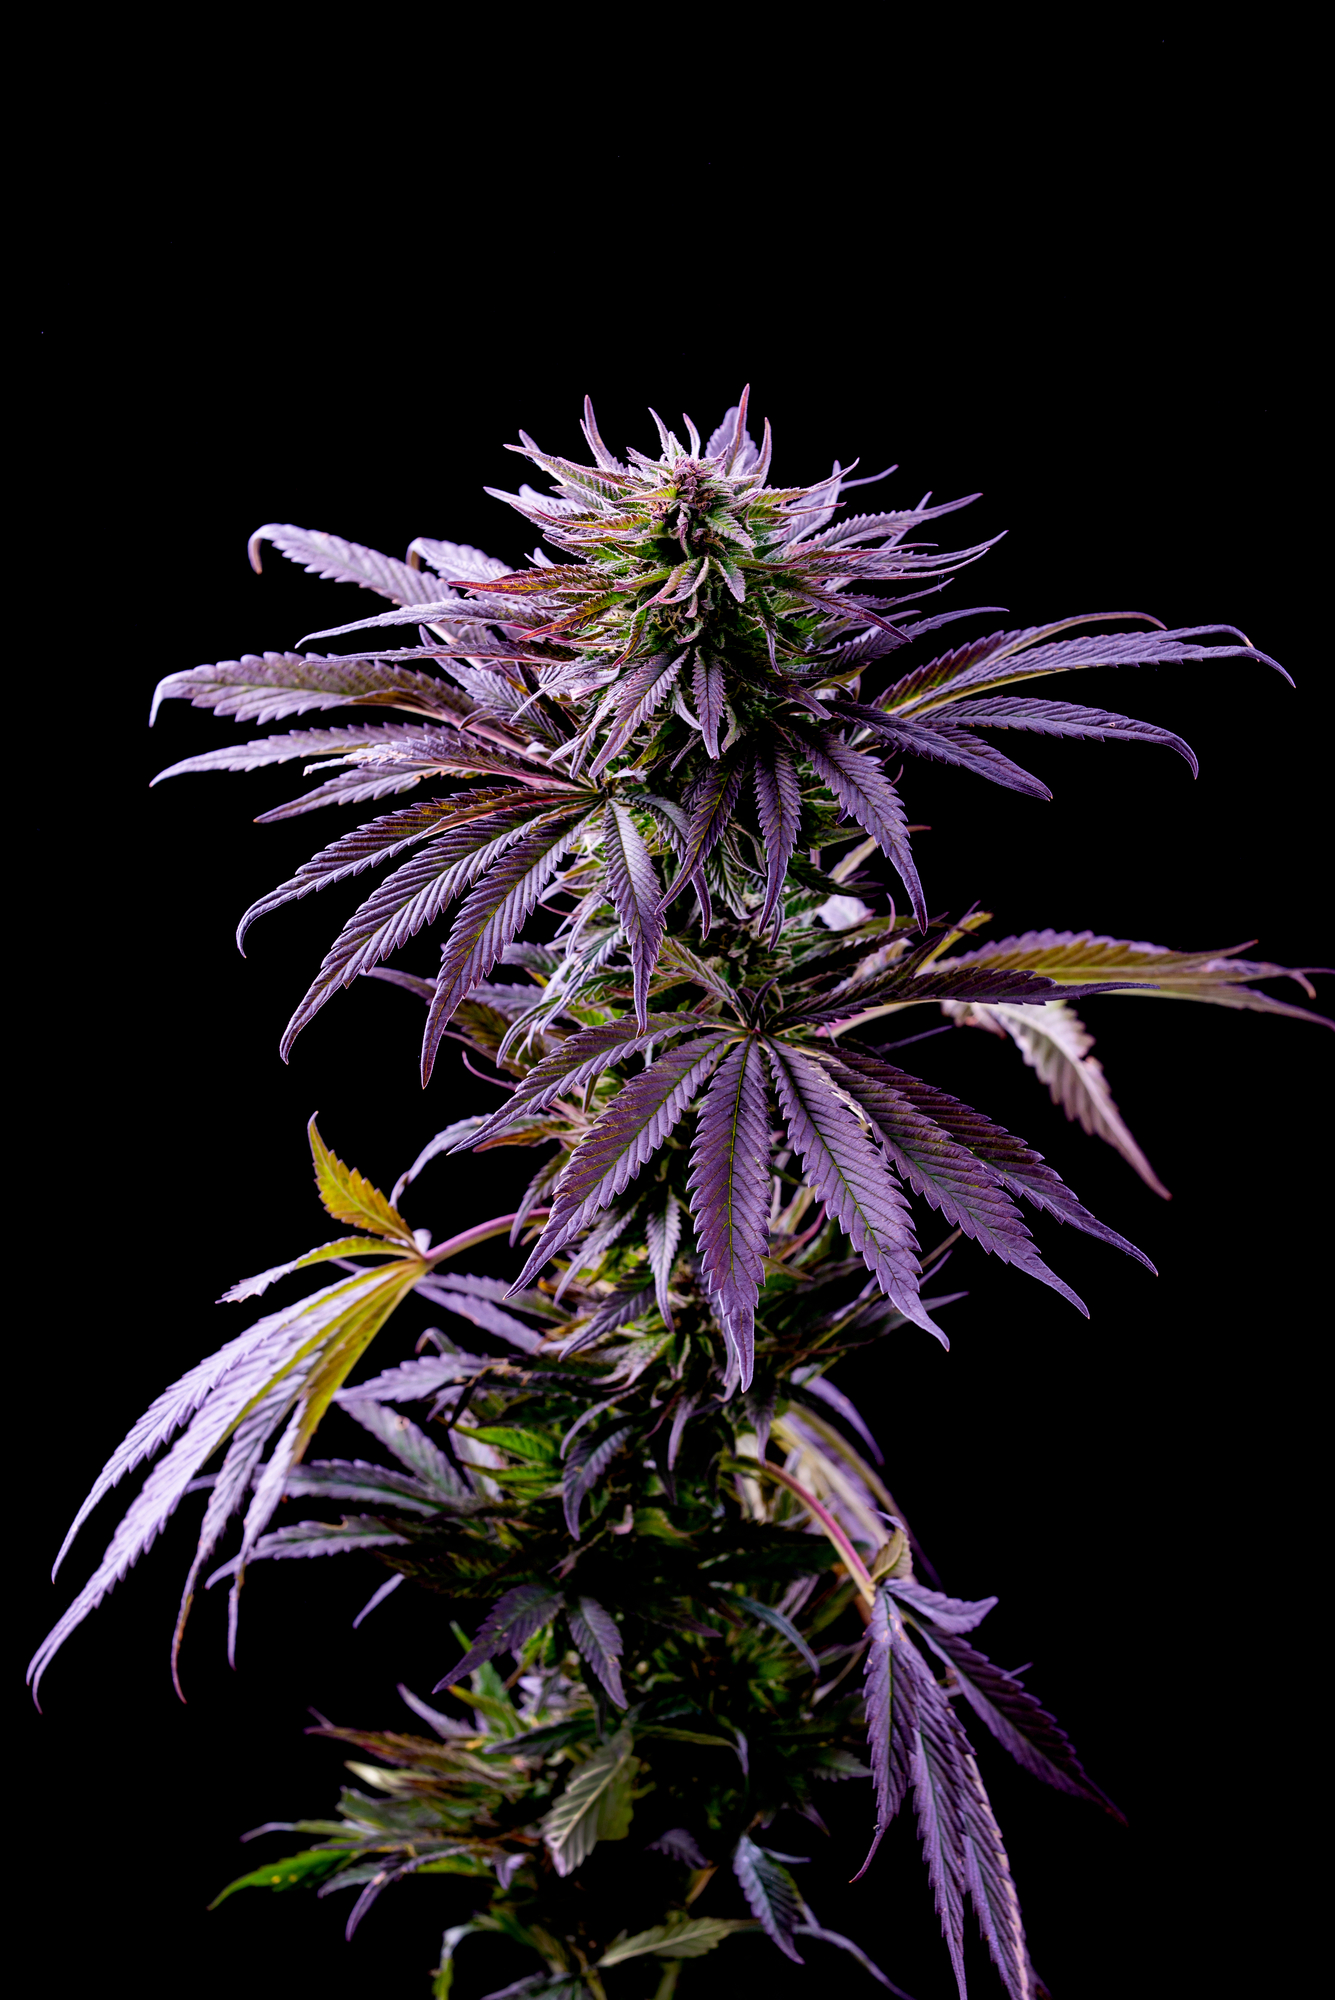 Grandaddy purple weed strain